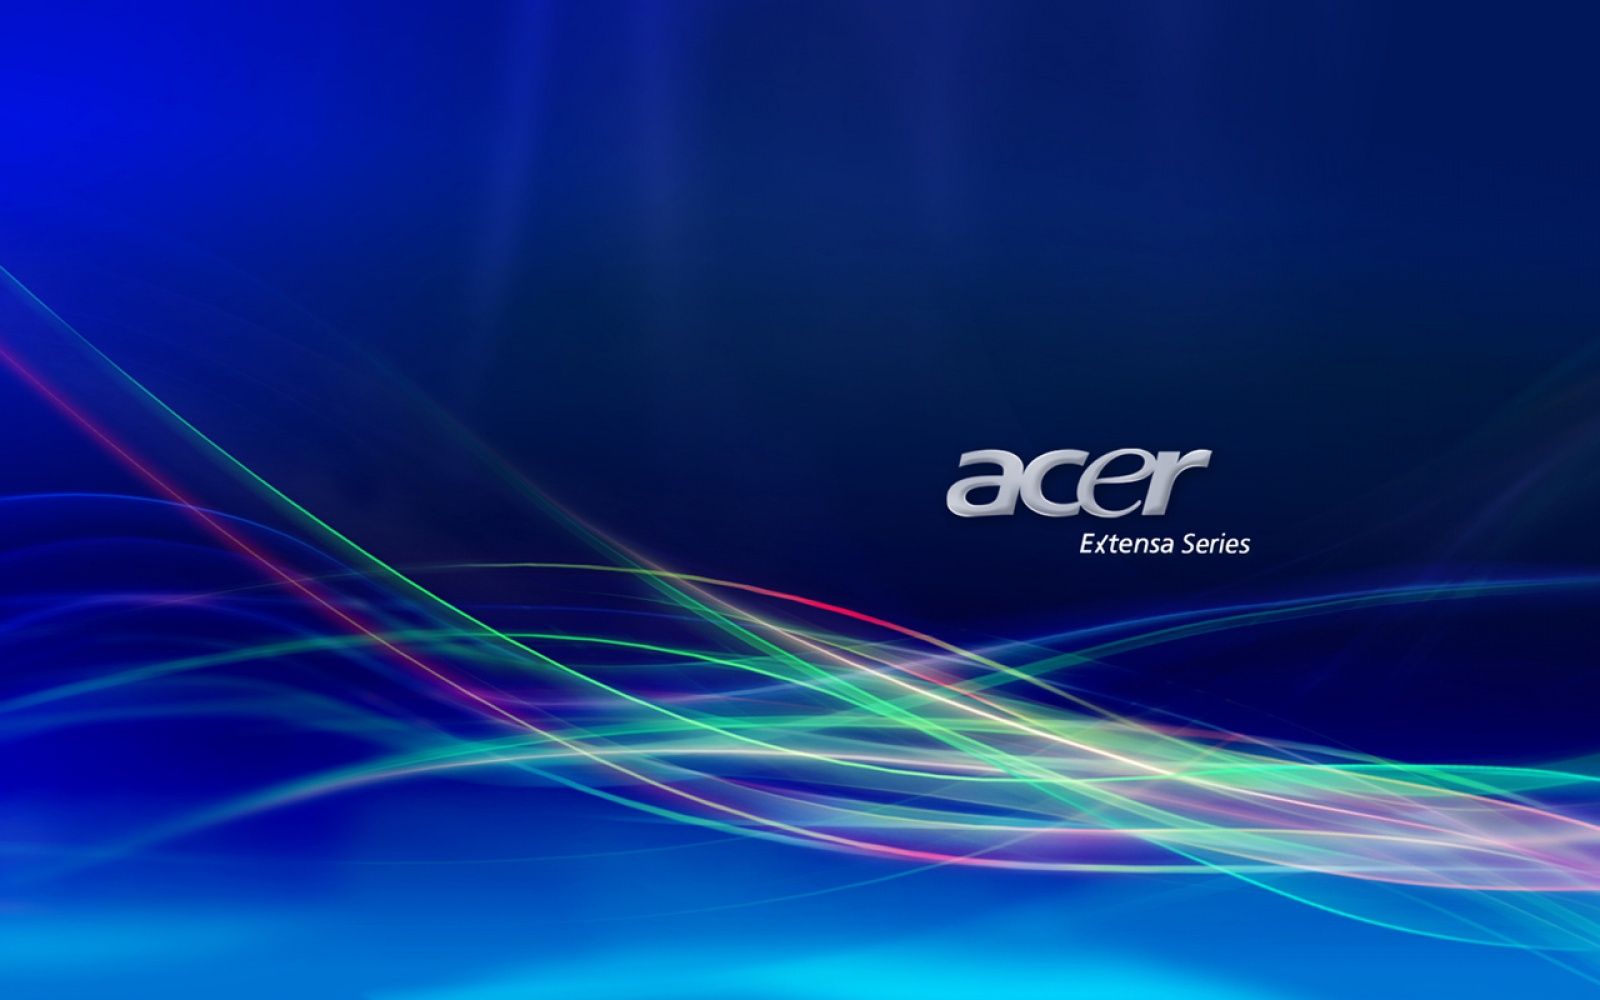 Acer Desktop Wallpapers Group 79